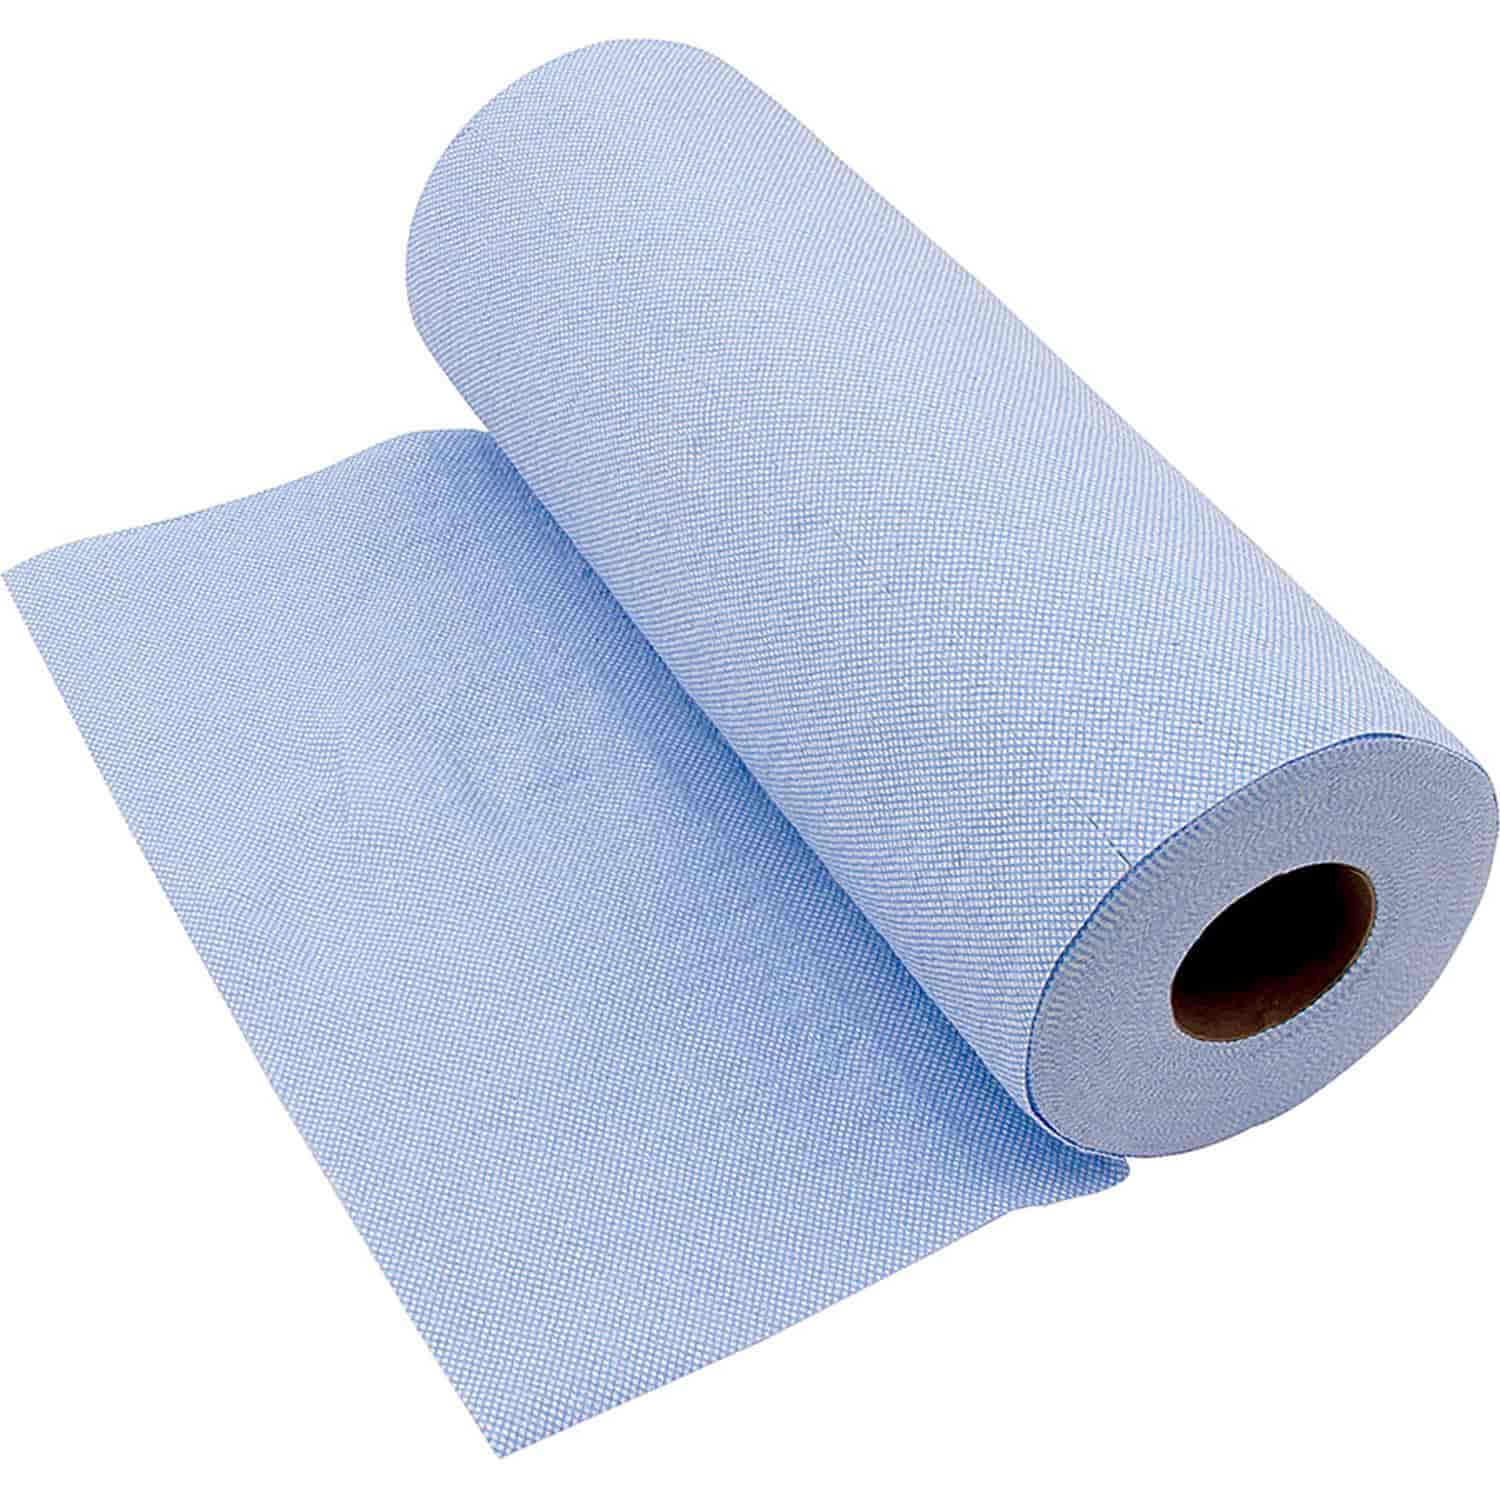 Blue Shop Towel Roll [60 Count]